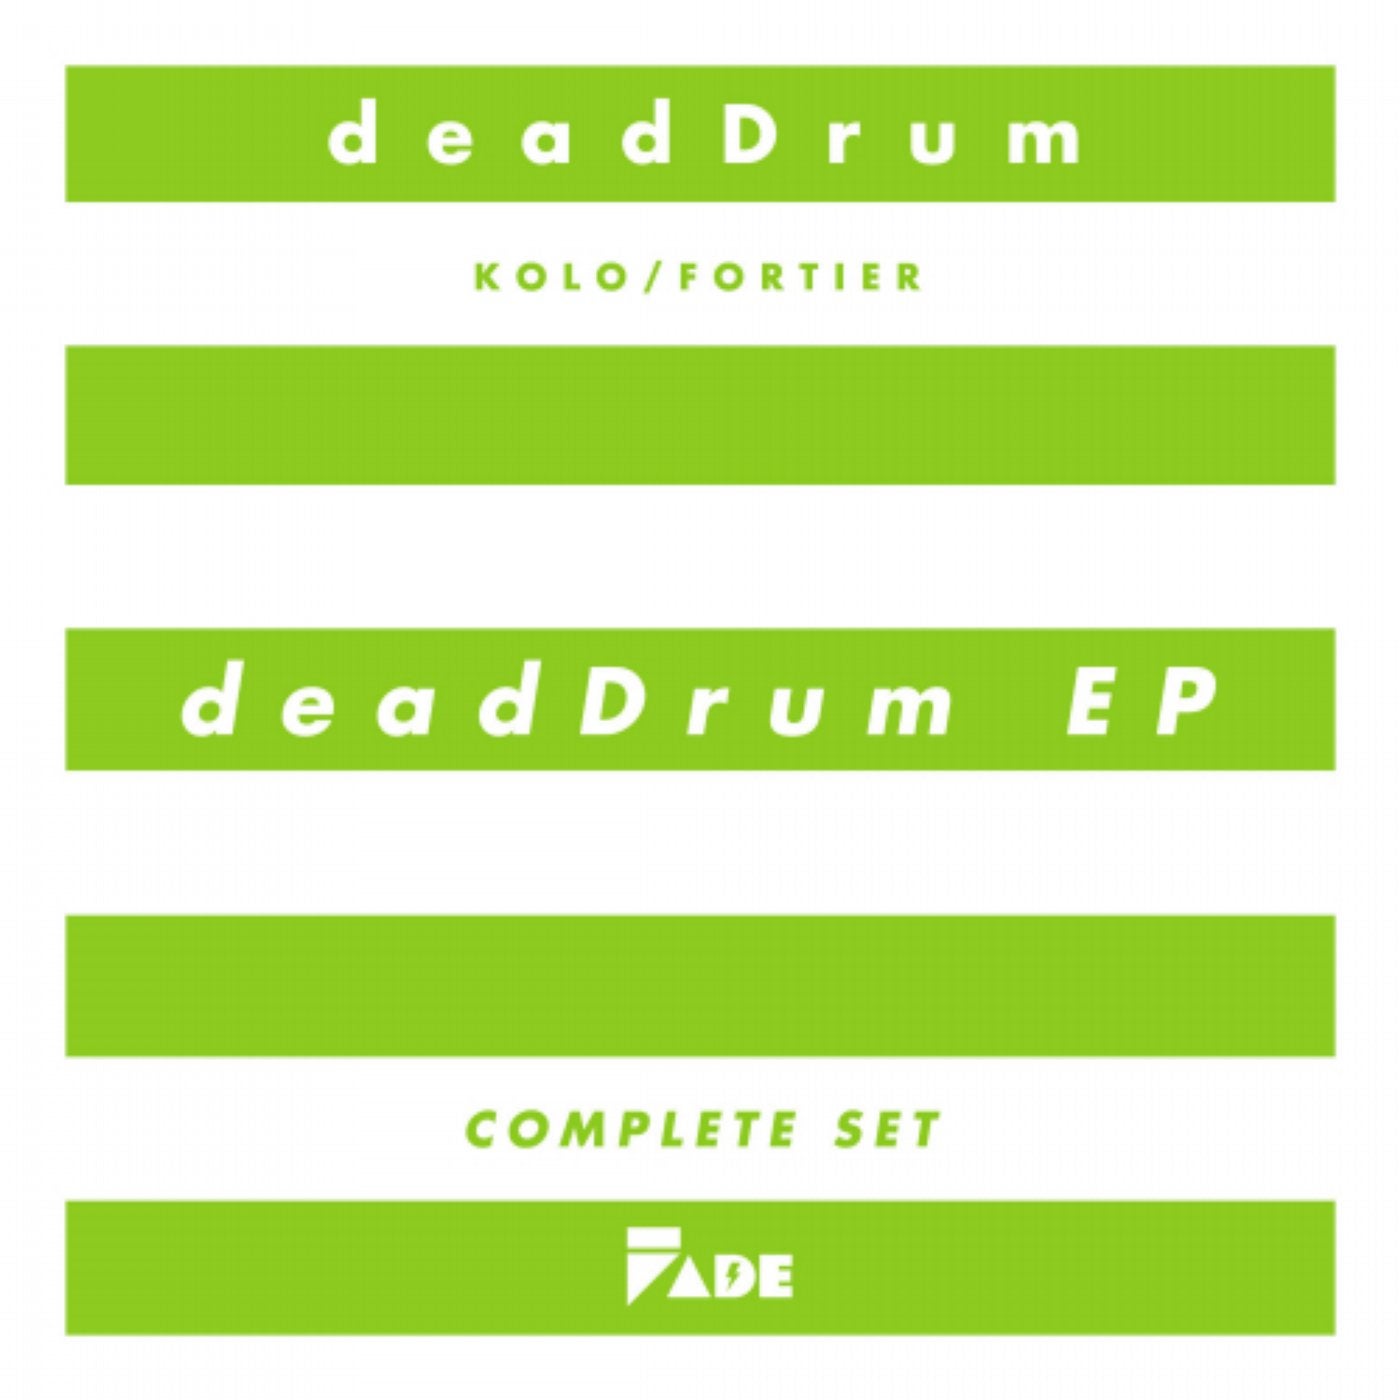 deadDrum (Remastered)